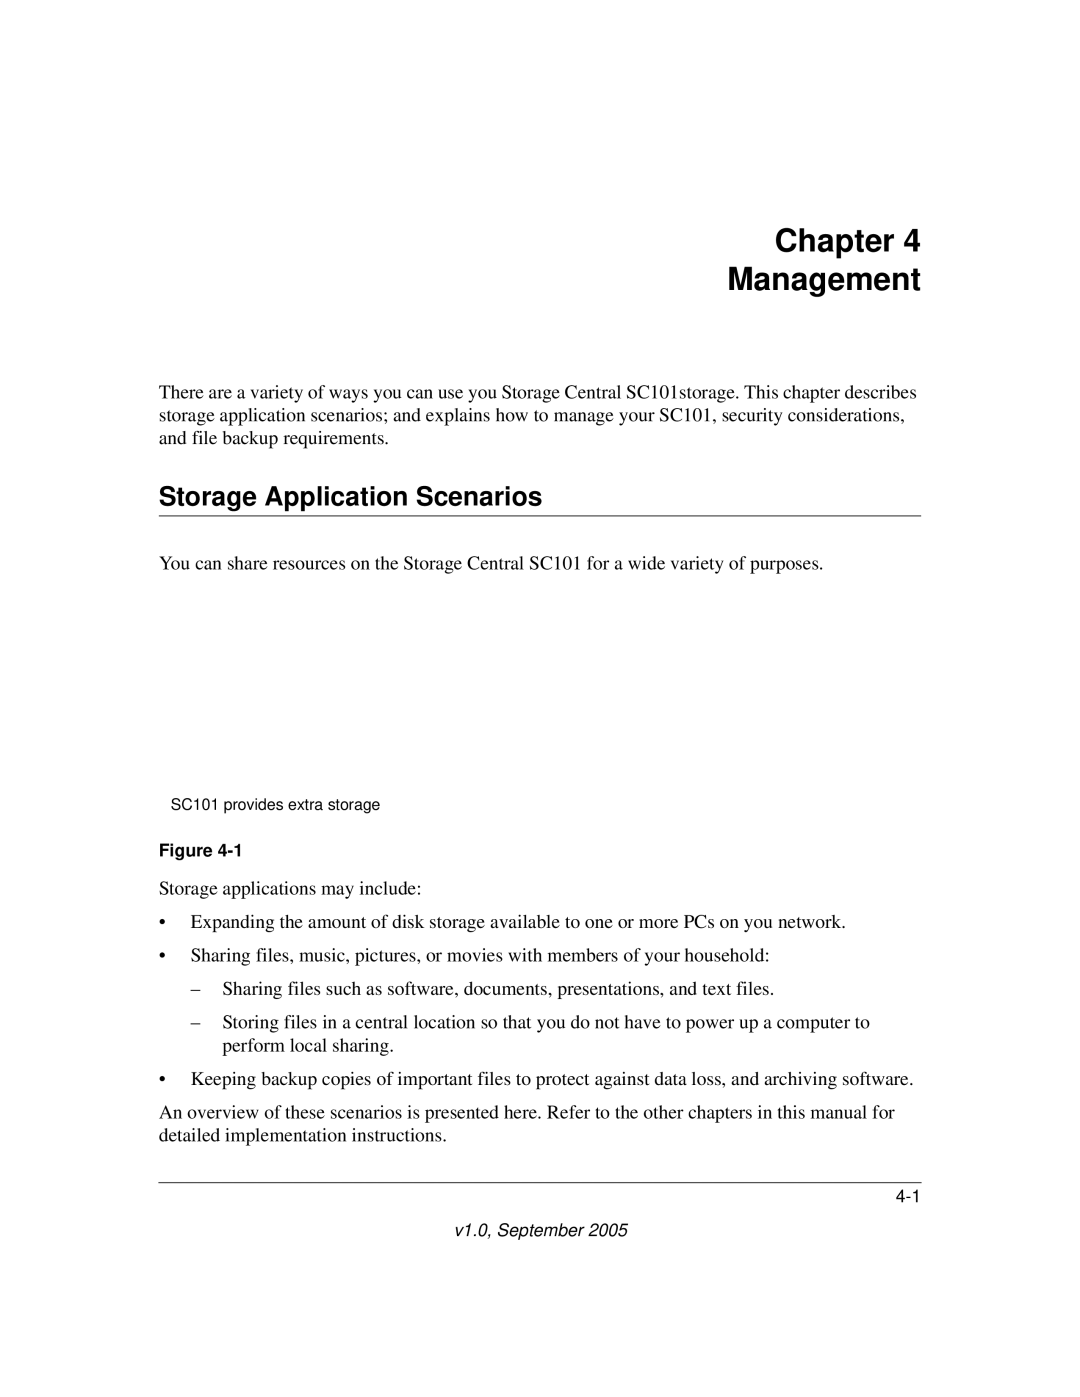 NETGEAR SC101 manual Chapter Management, Storage Application Scenarios 